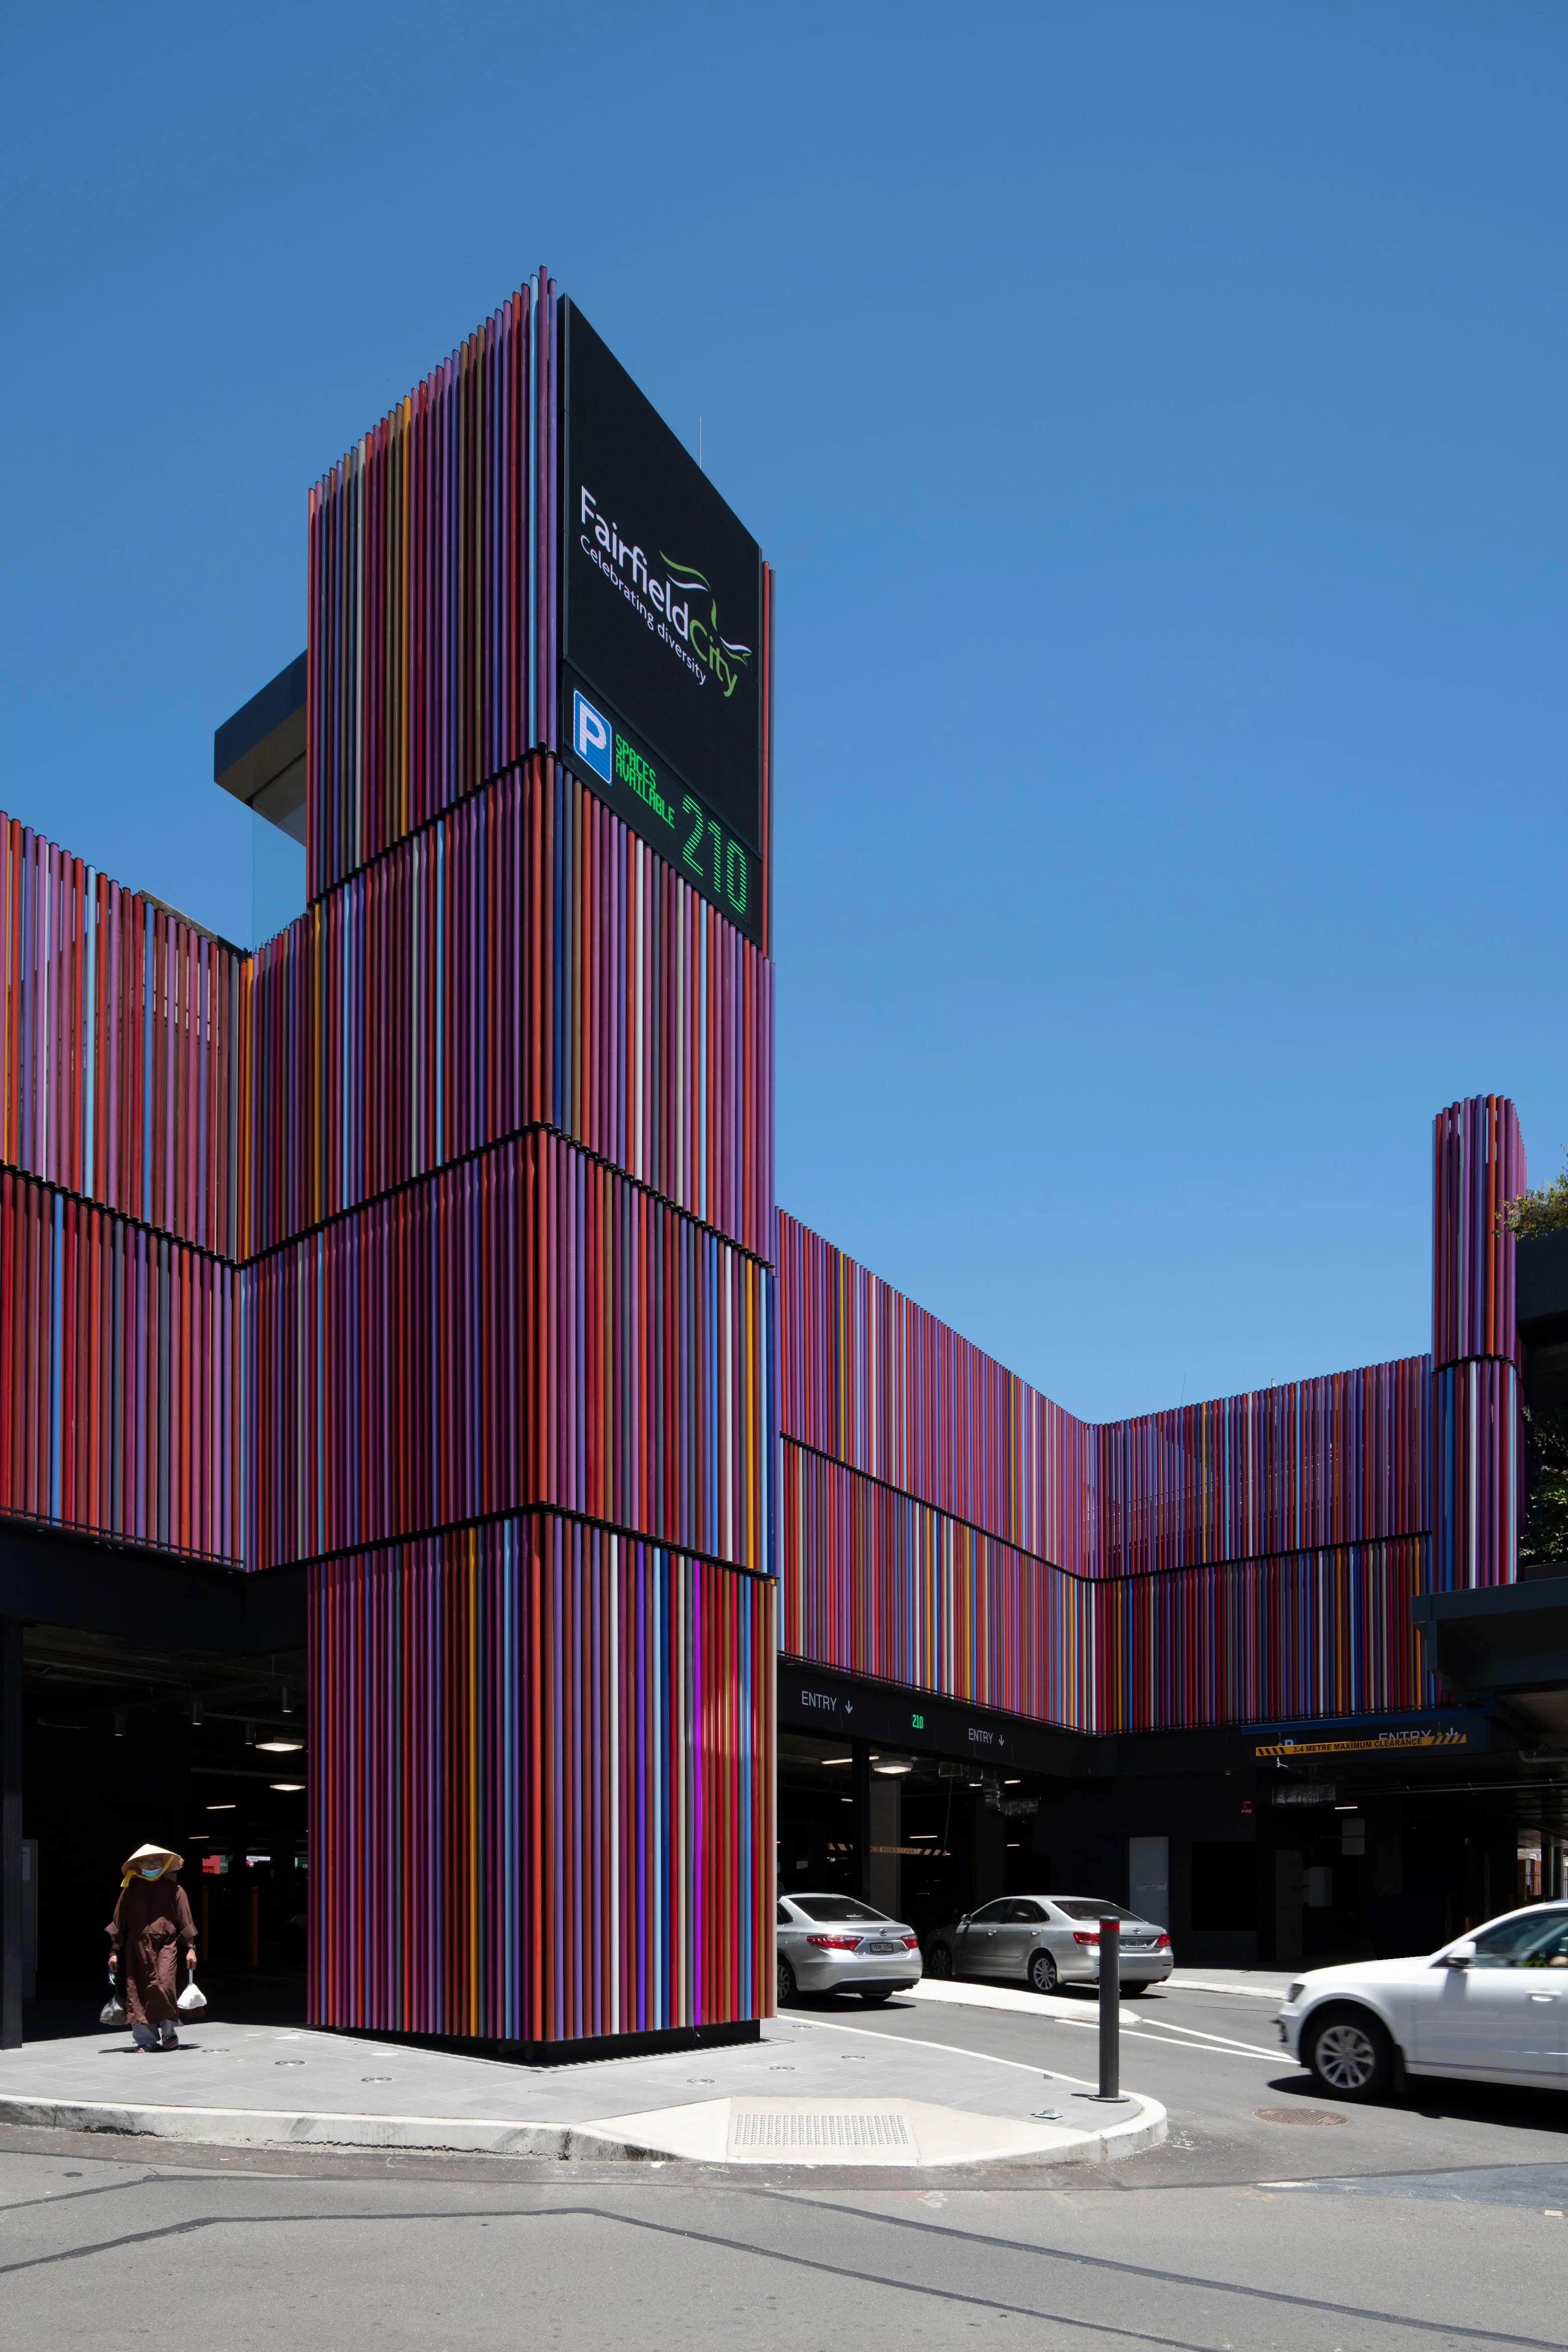 Colourful exterior of three level carpark